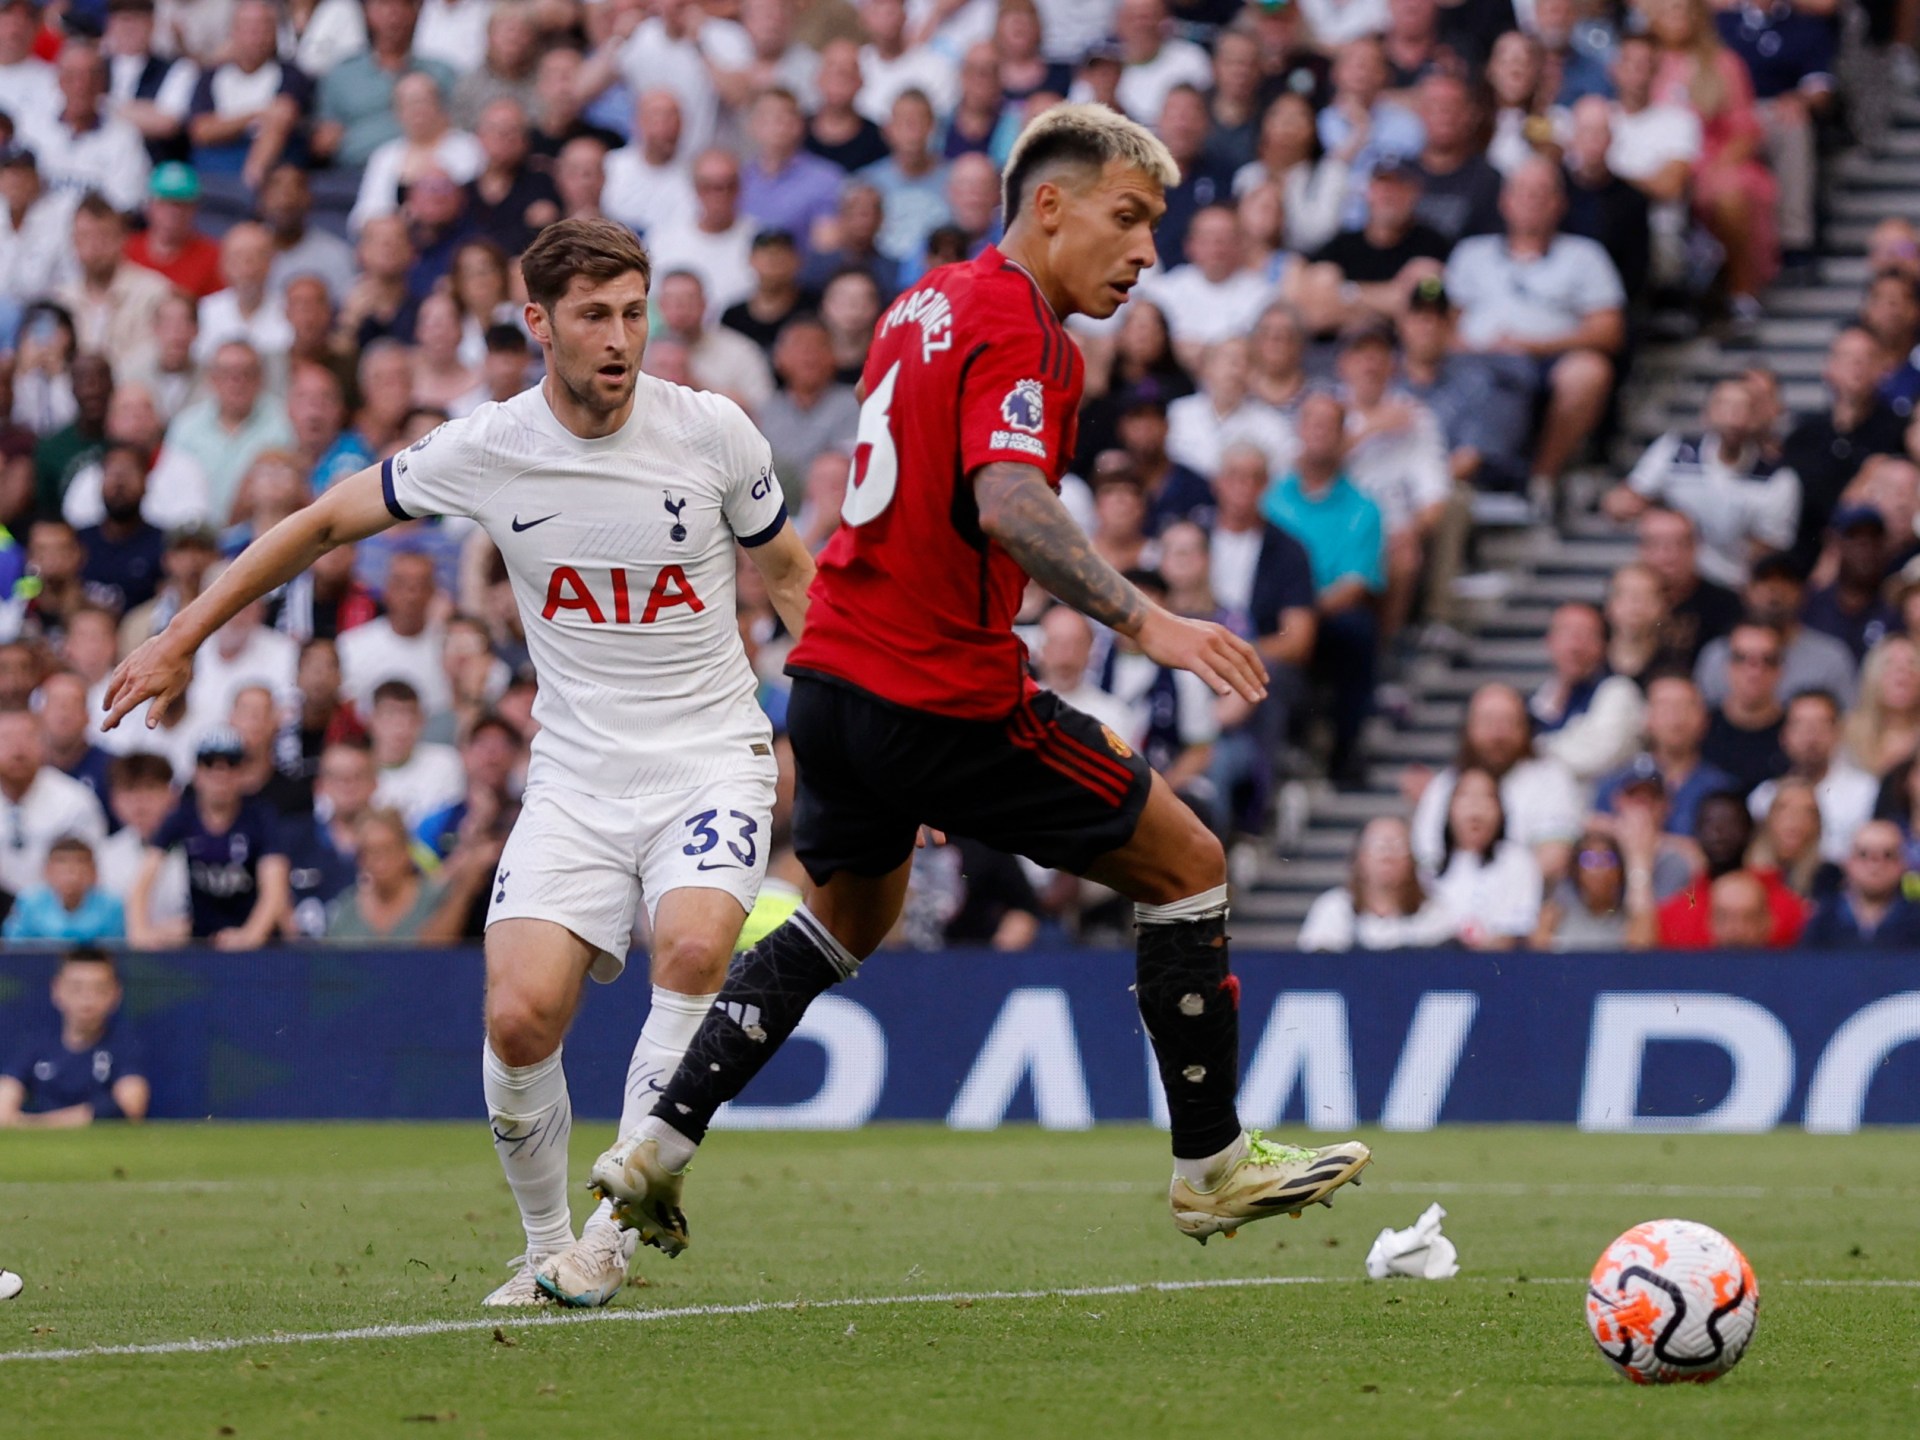 Tottenham contra manchester united